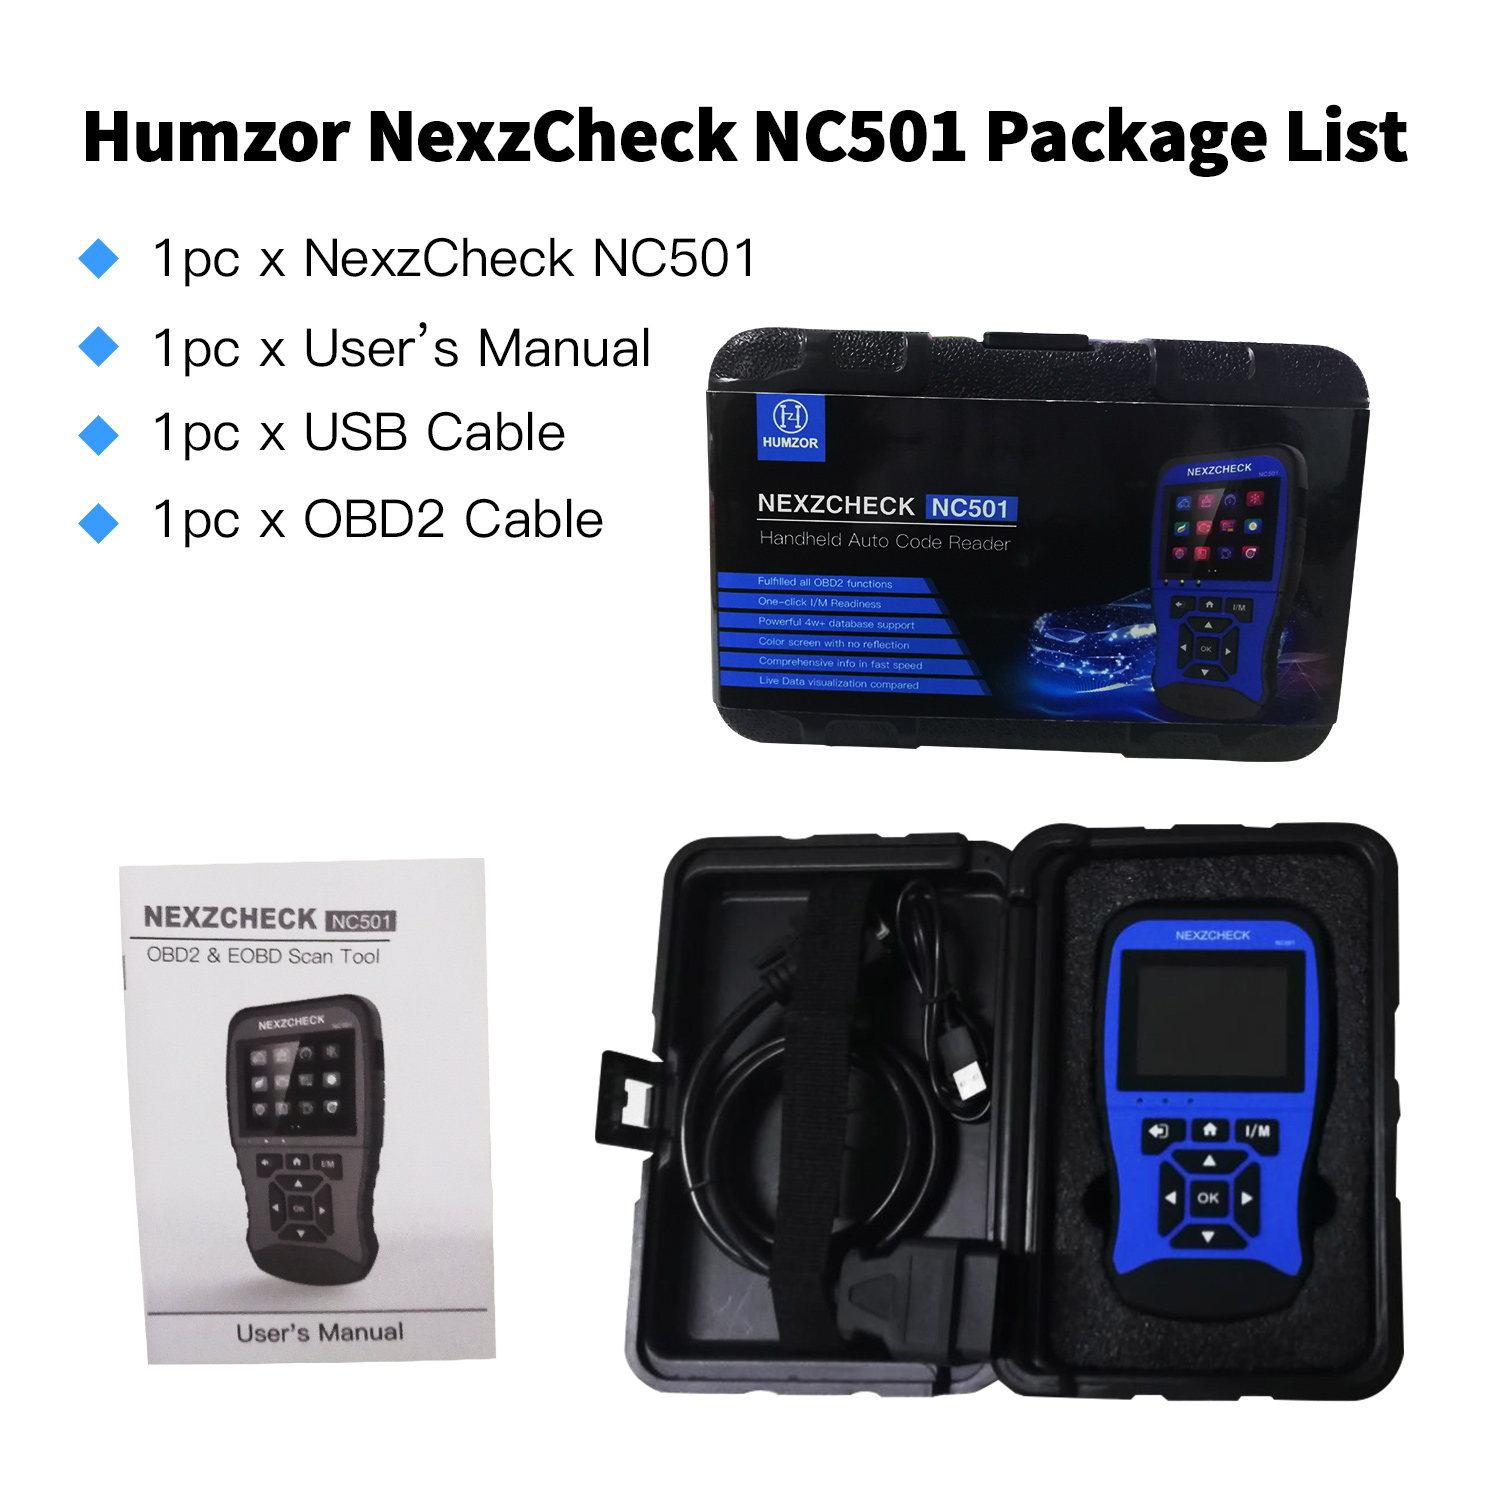 NexzCheck NC501 package